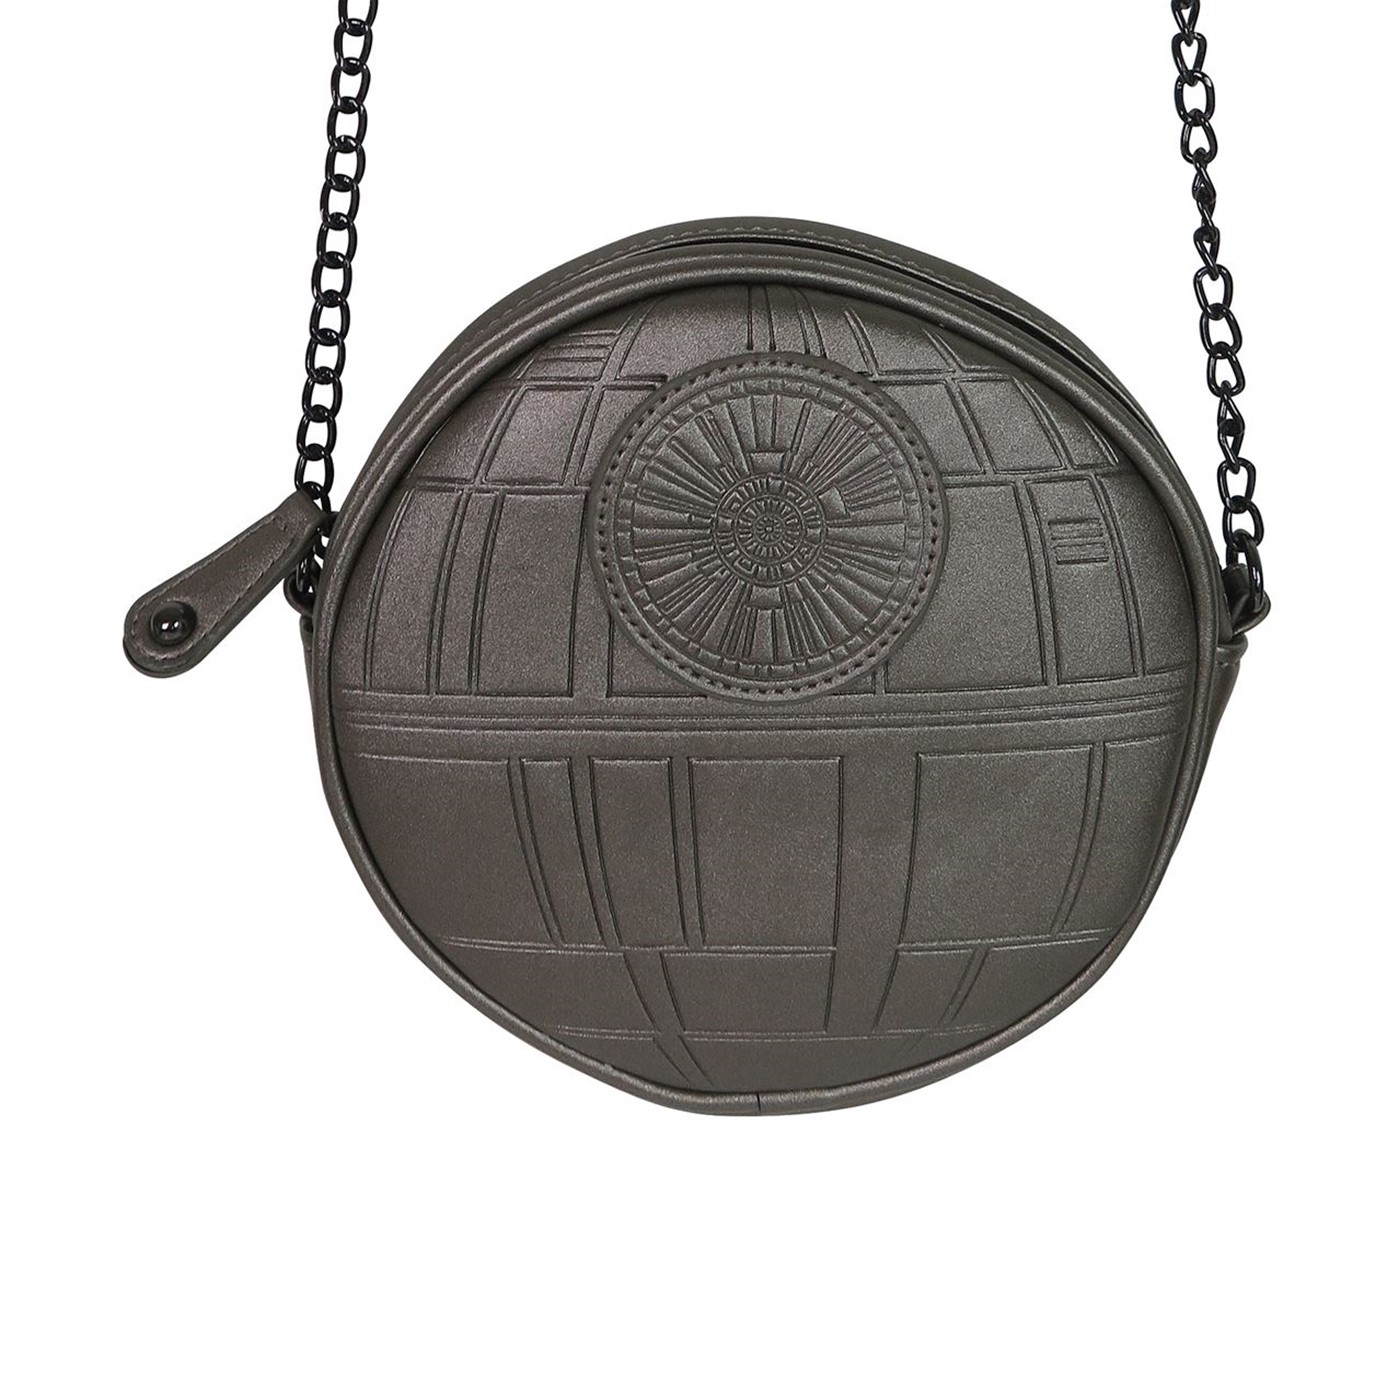 Star Wars Rogue One Death Star Crossbody Handbag